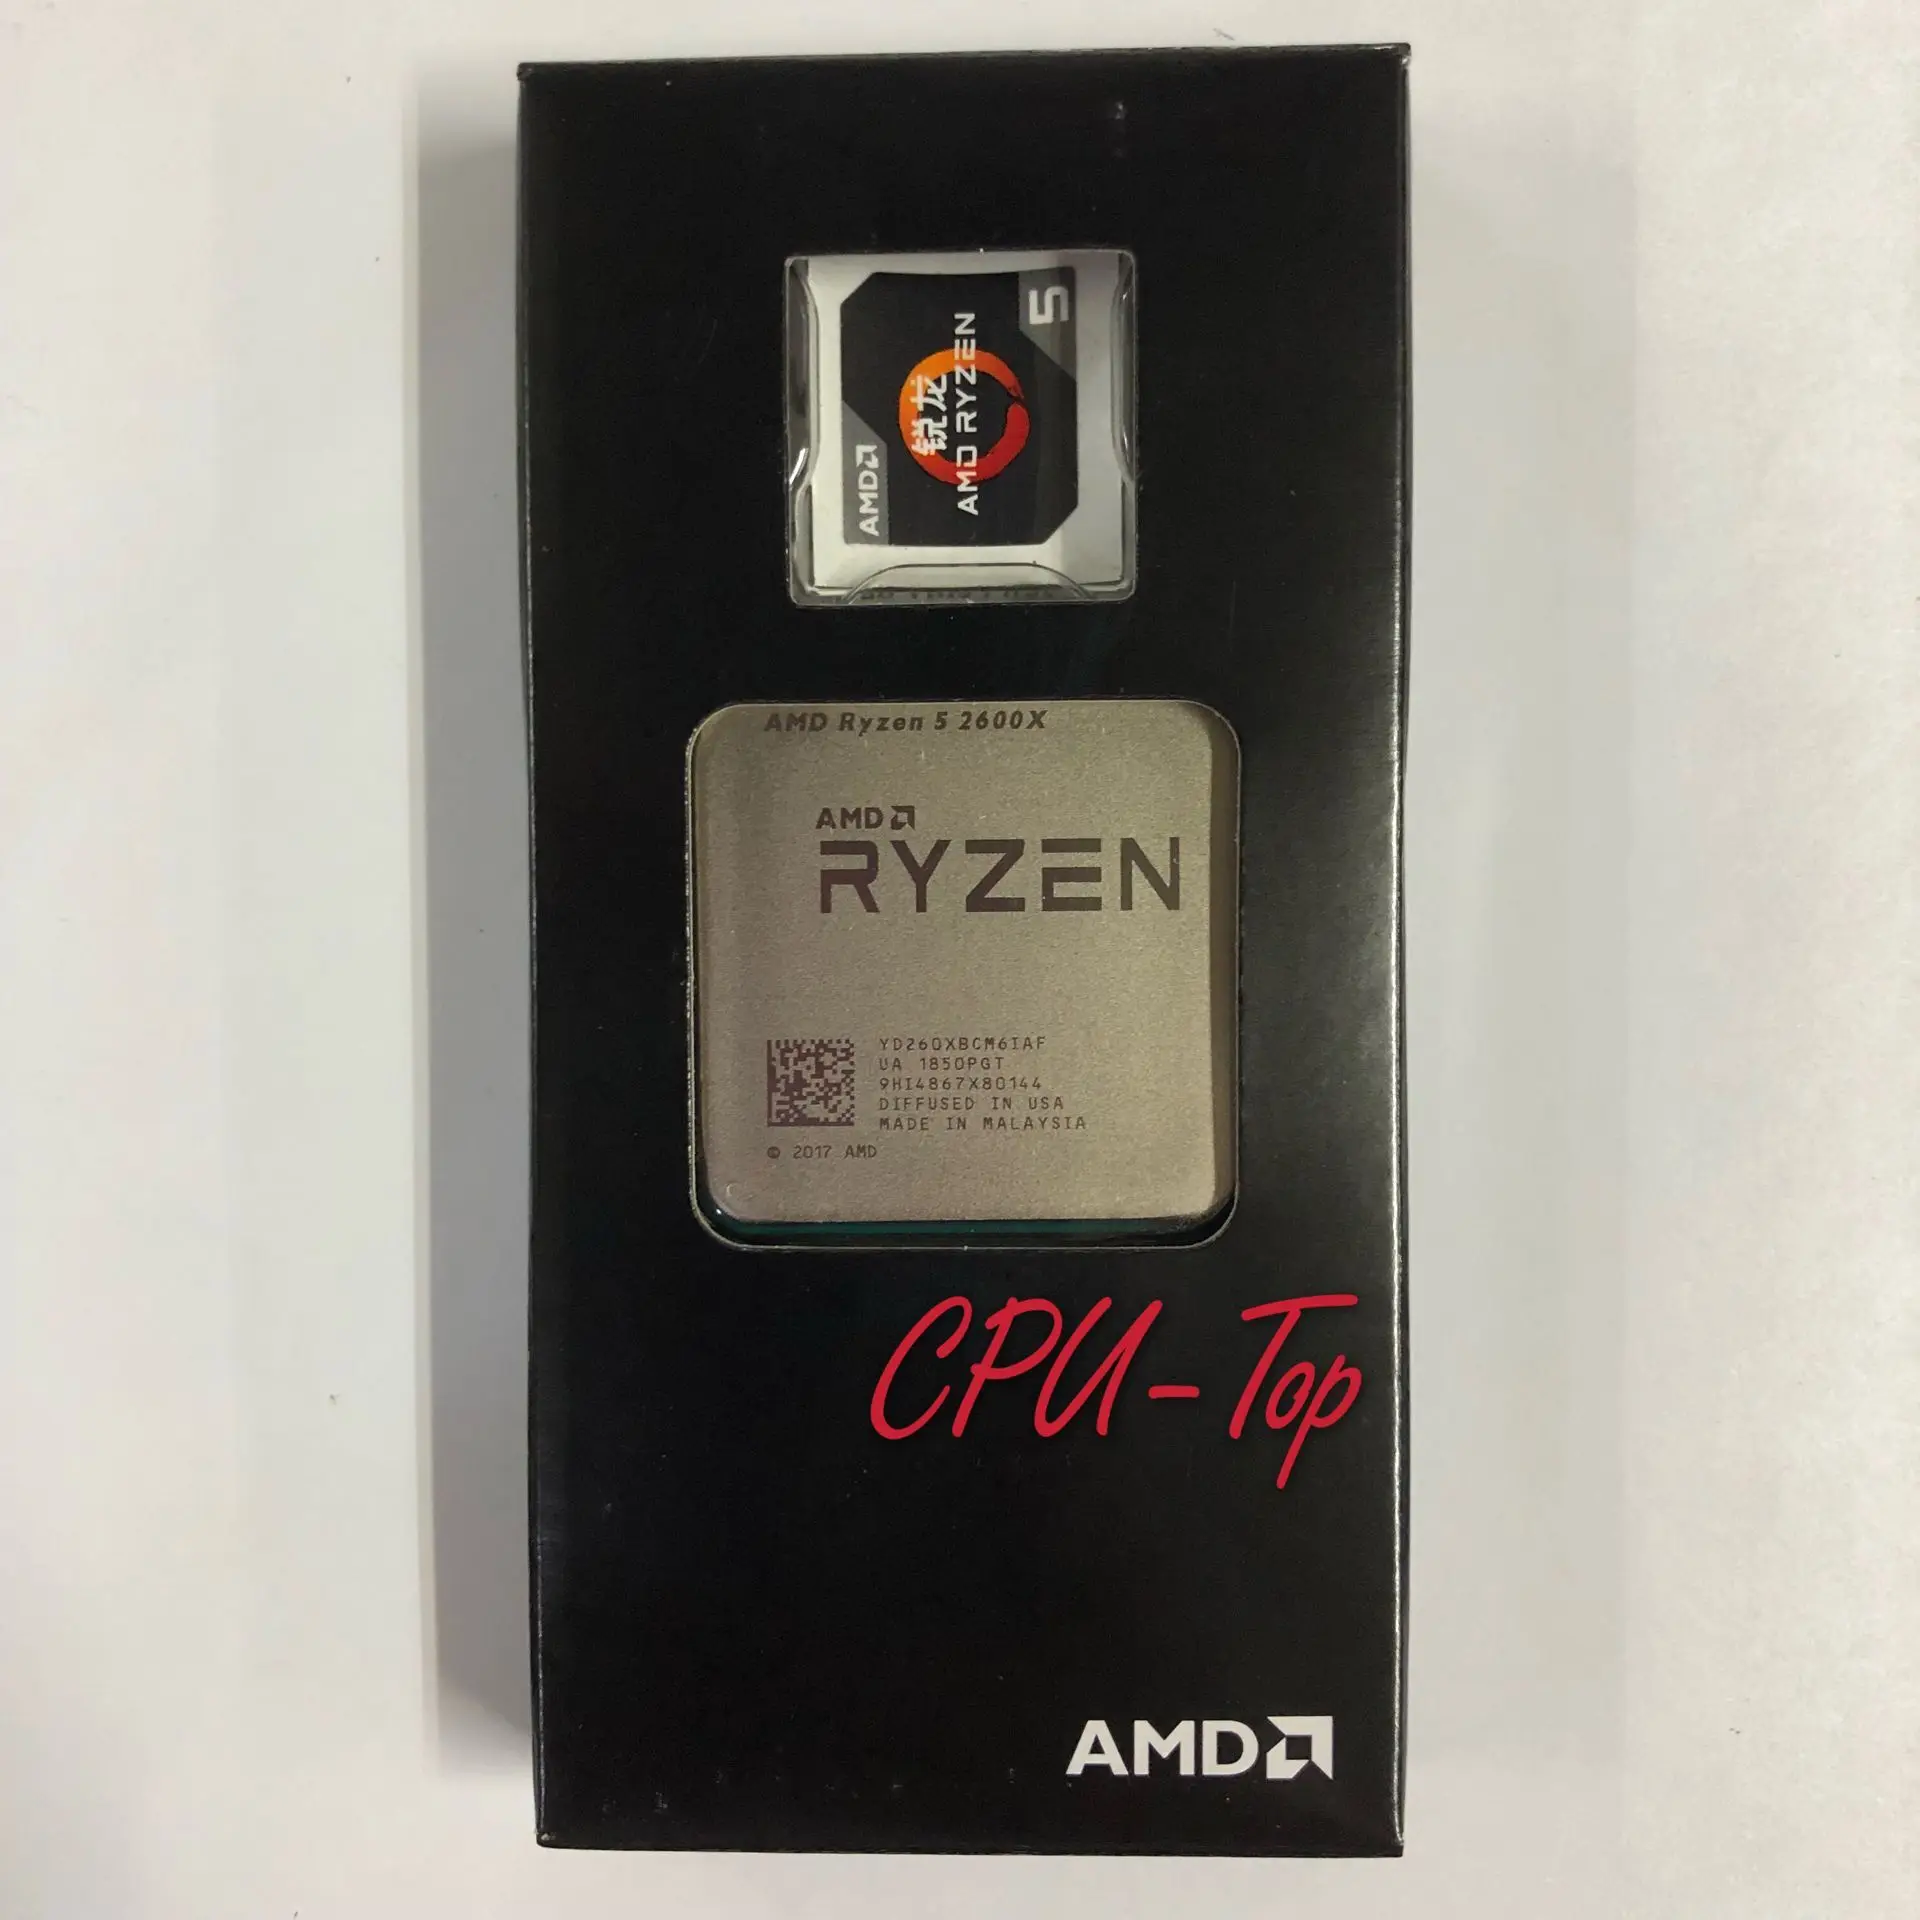 

AMD Ryzen 5 2600X R5 2600X 3.6 GHz Six-Core Twelve-Thread CPU Processor L2=3M L3=16M 95W YD260XBCM6IAF Socket AM4